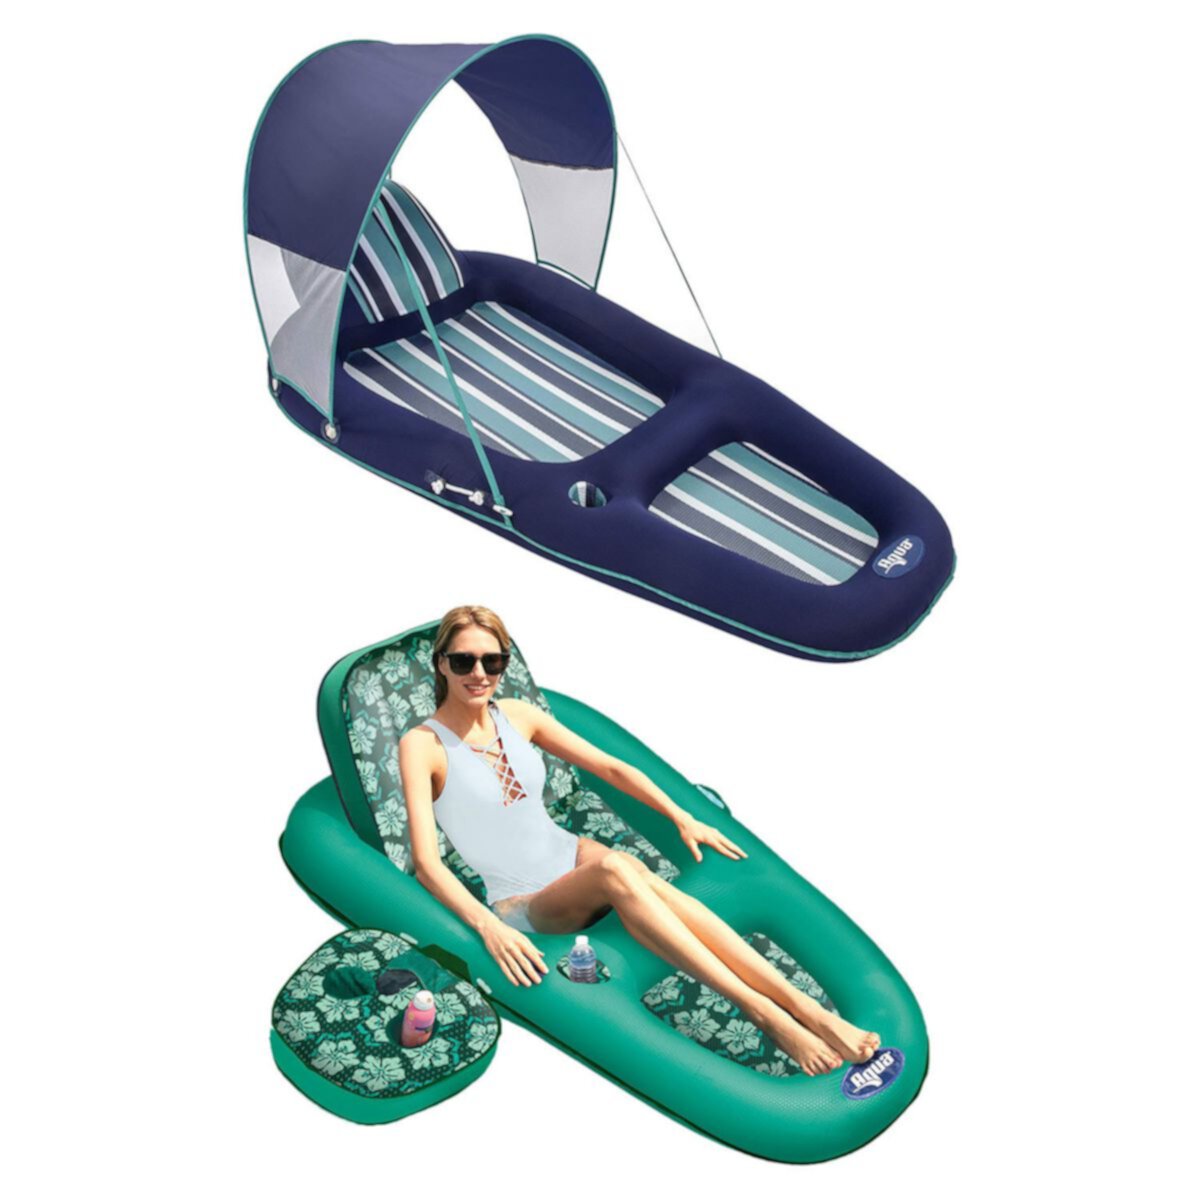 Aqua Leisure Luxury Canopy Float, синий и Campania Recliner/Tanner Chair, зеленый Aqua